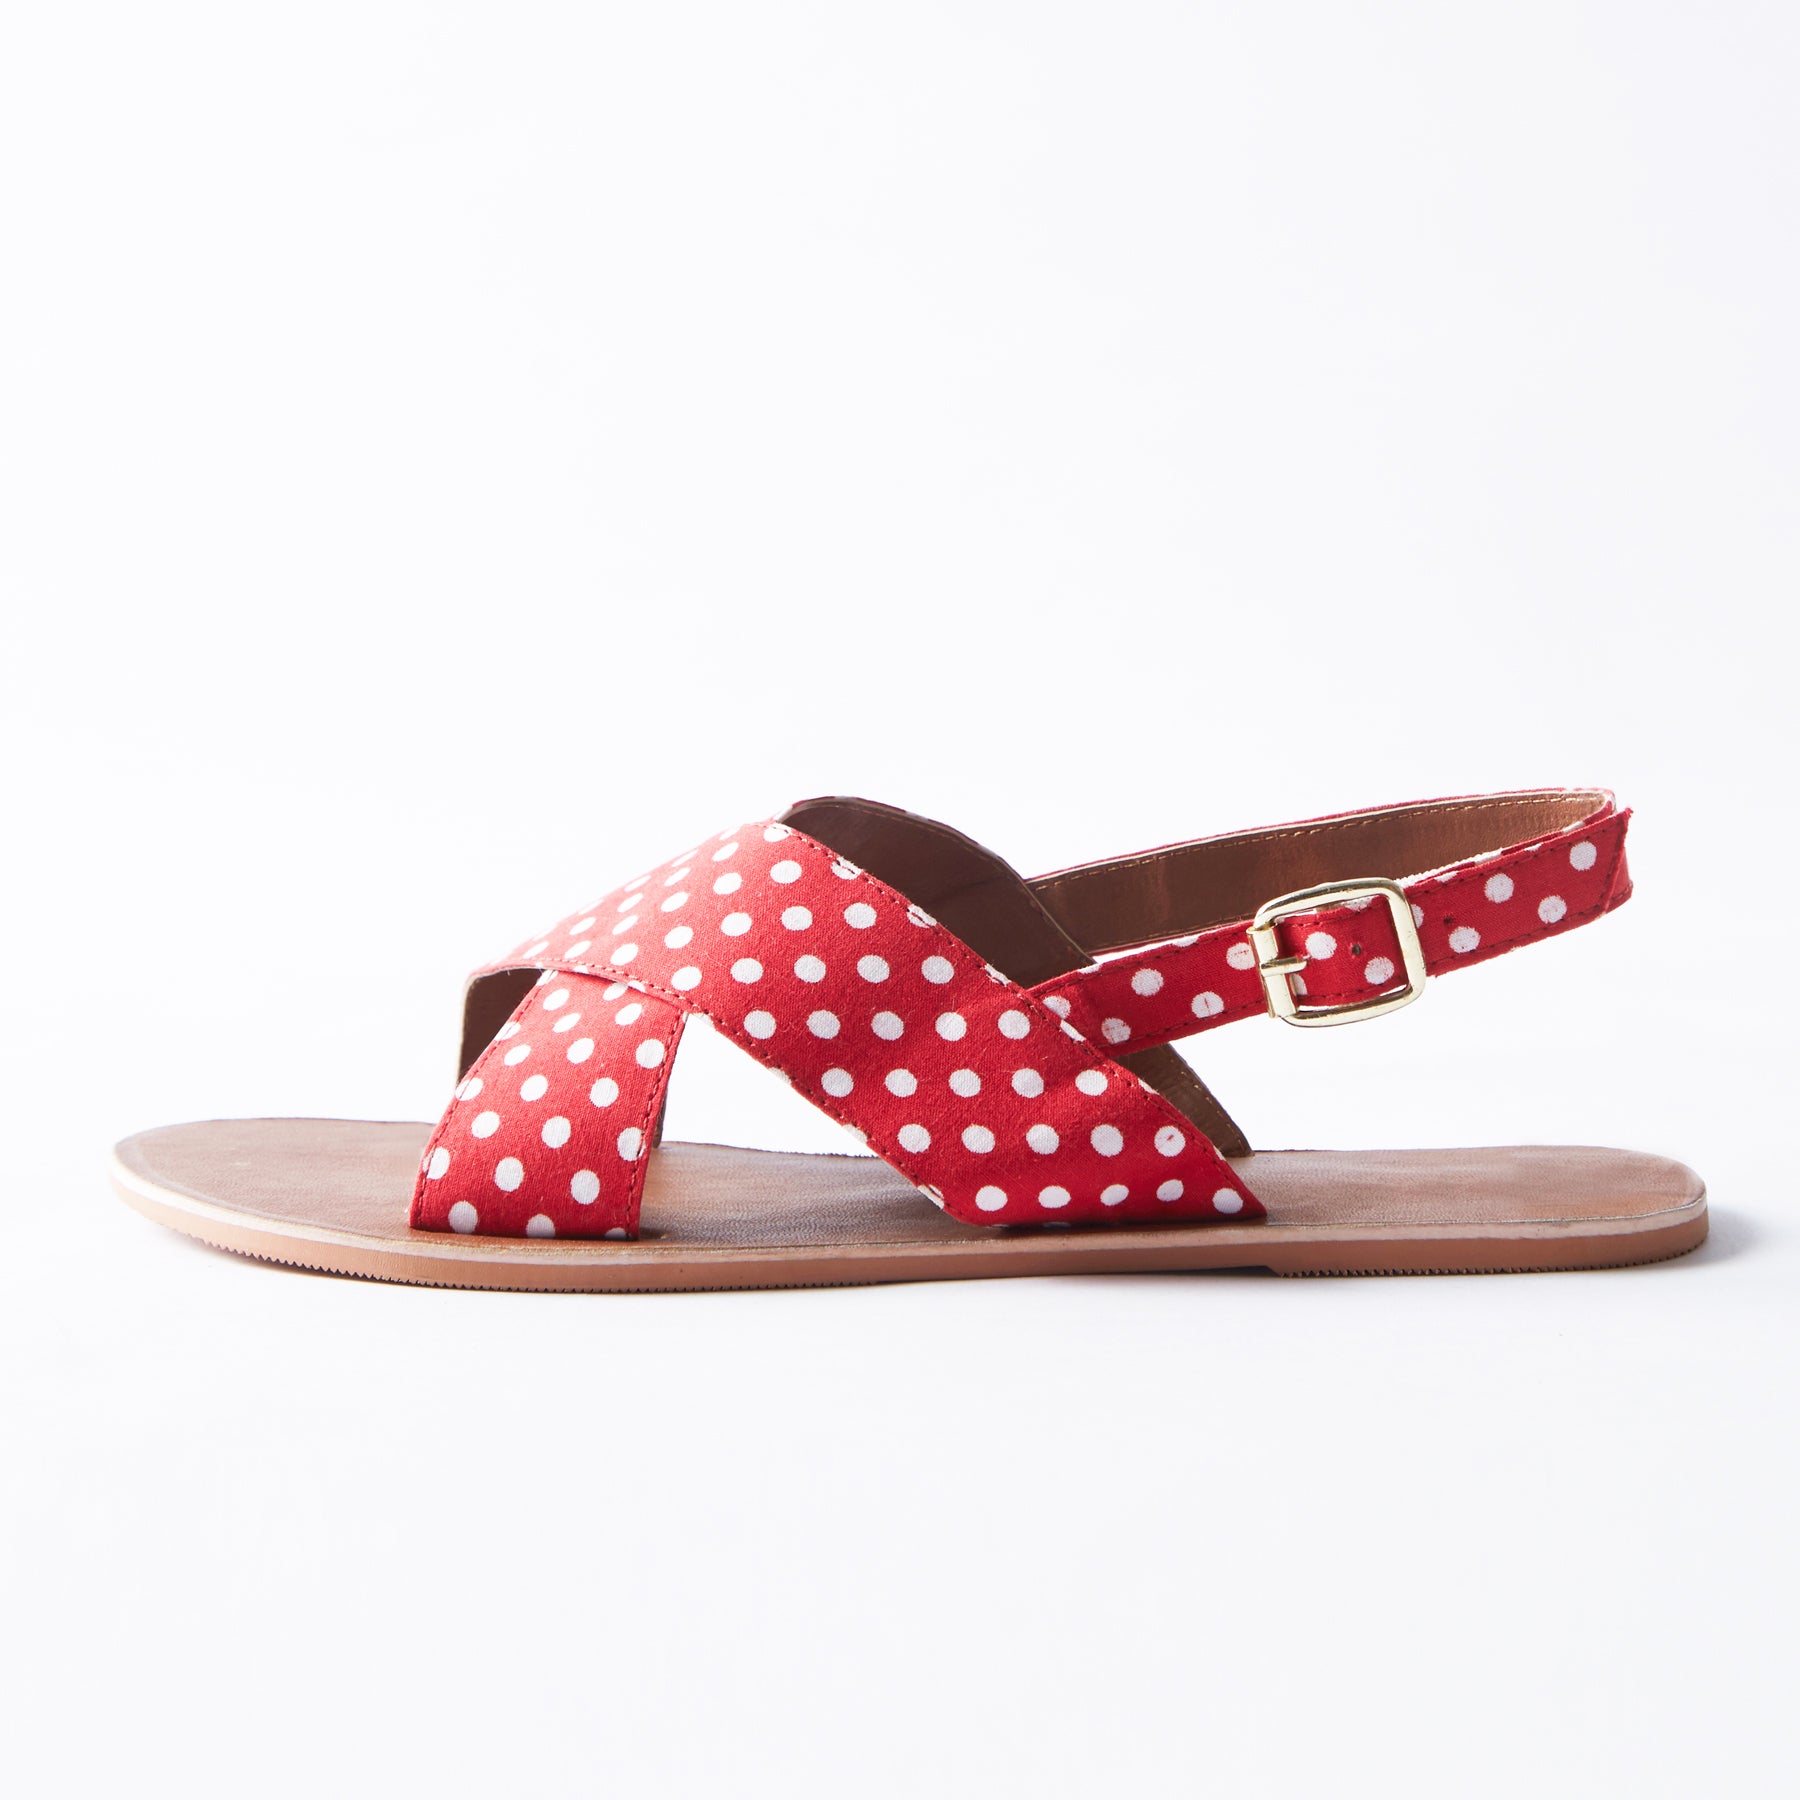 Scarlet Polka Cross Sandals